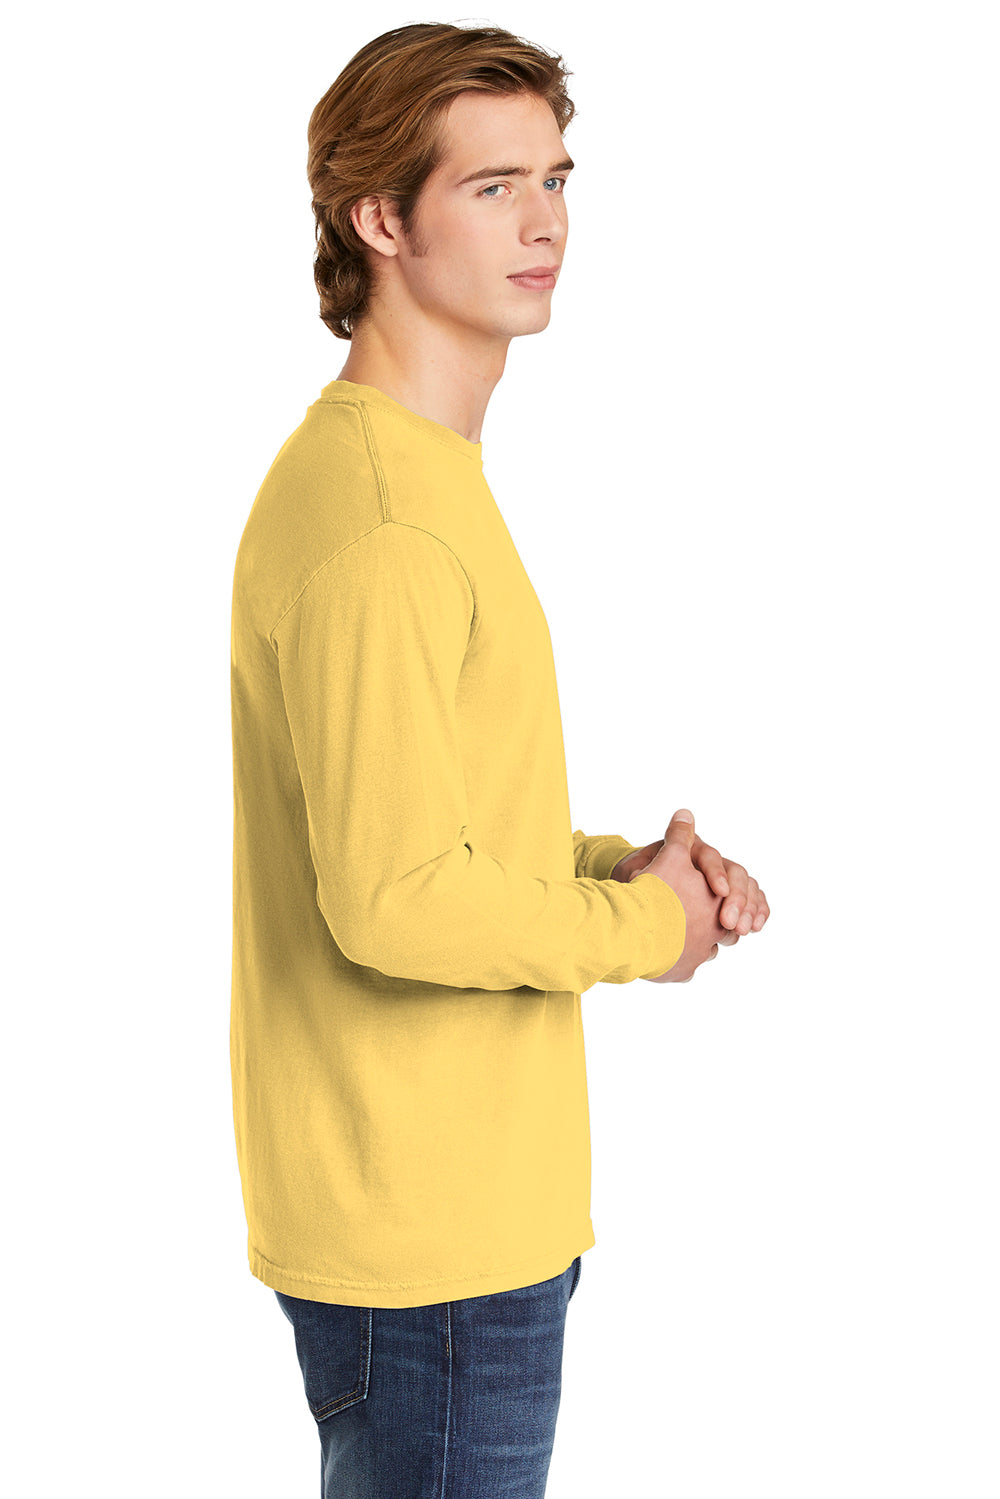 Comfort Colors 6014/C6014 Mens Long Sleeve Crewneck T-Shirt Butter Yellow Side